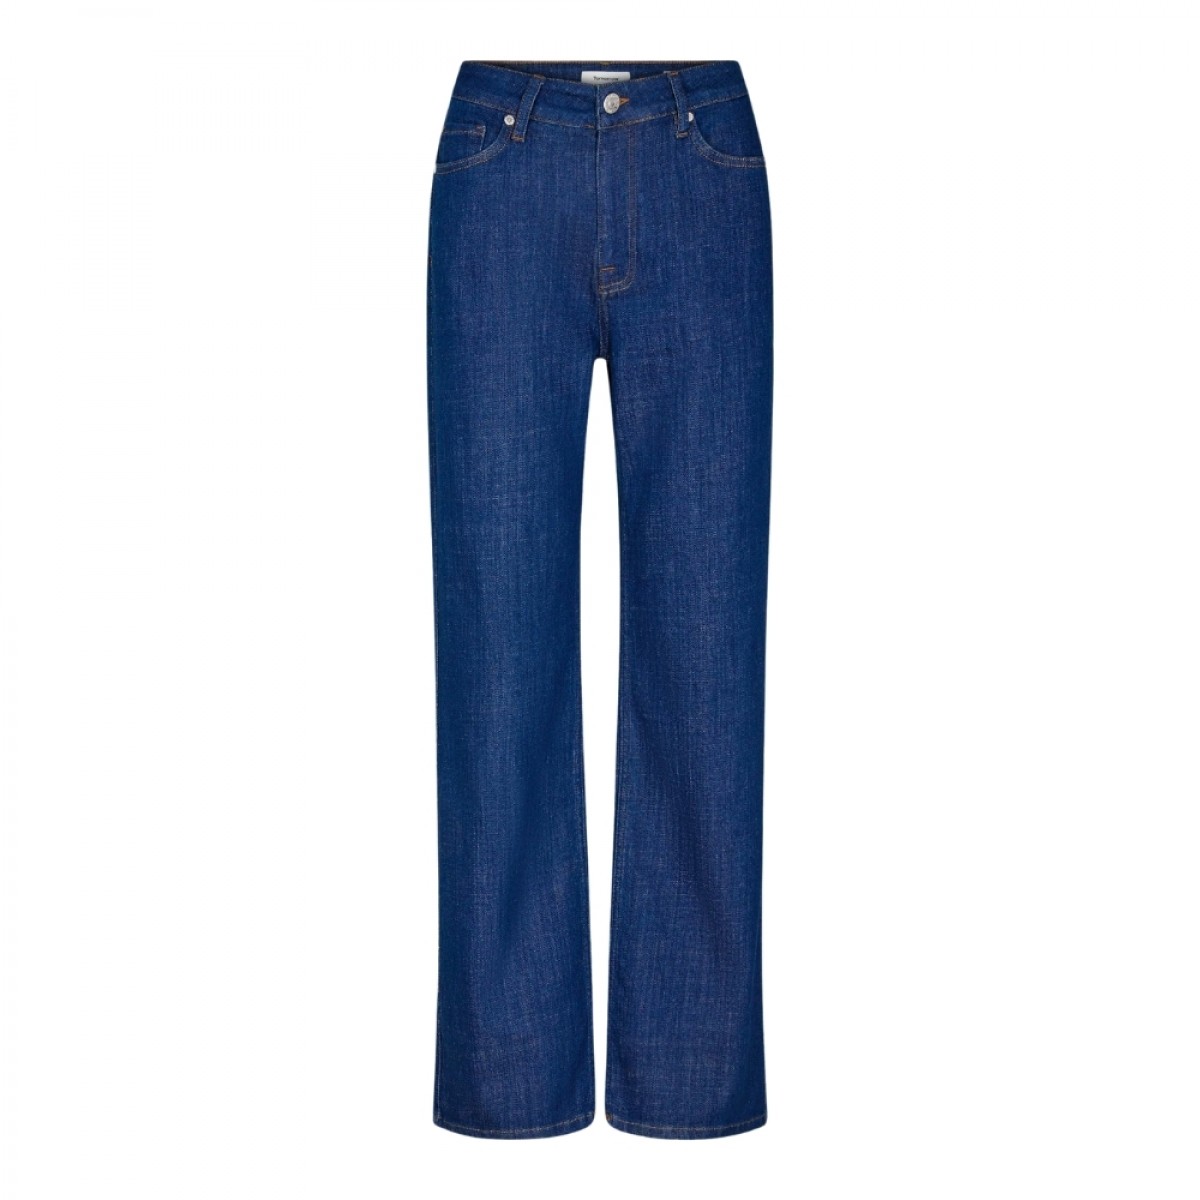 brown straight jeans wash vintage crude - denim blue - front